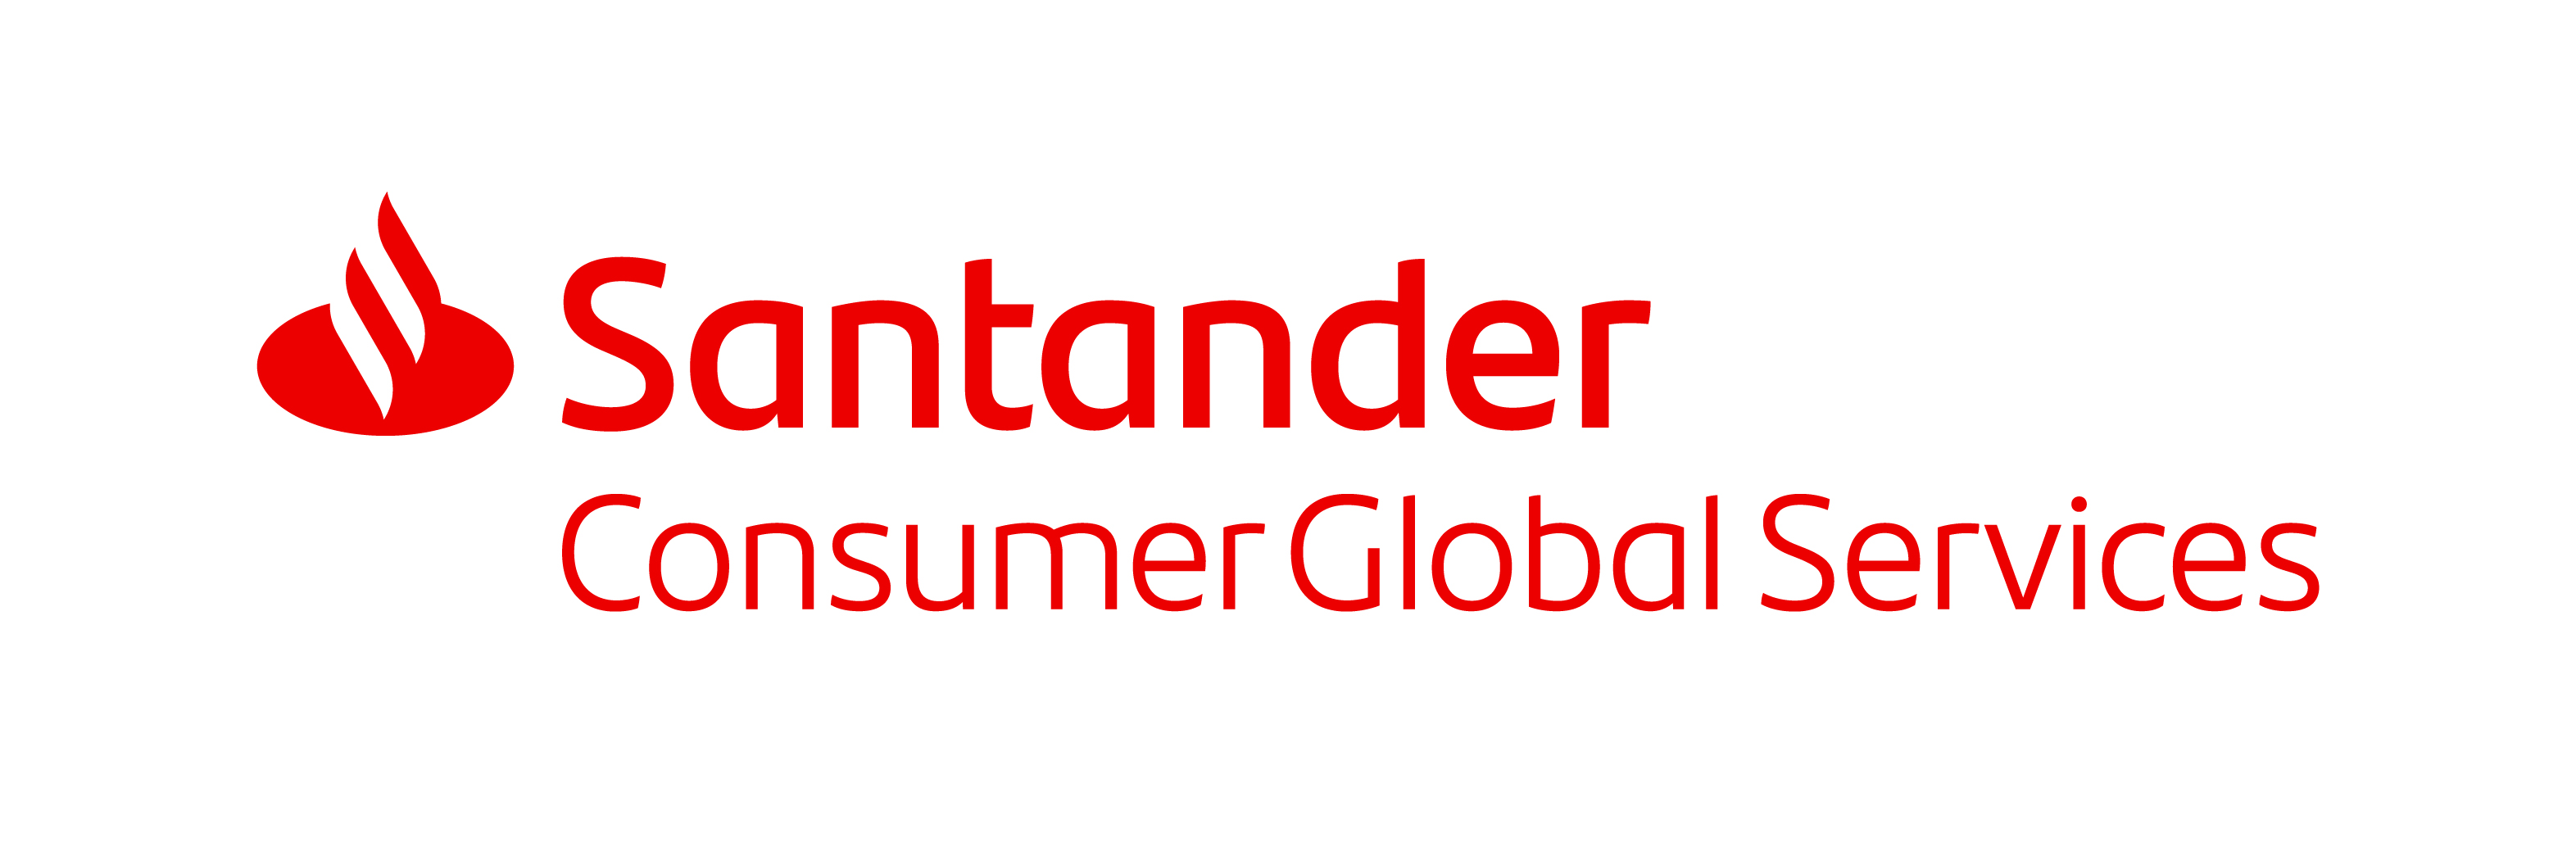 santander logo image